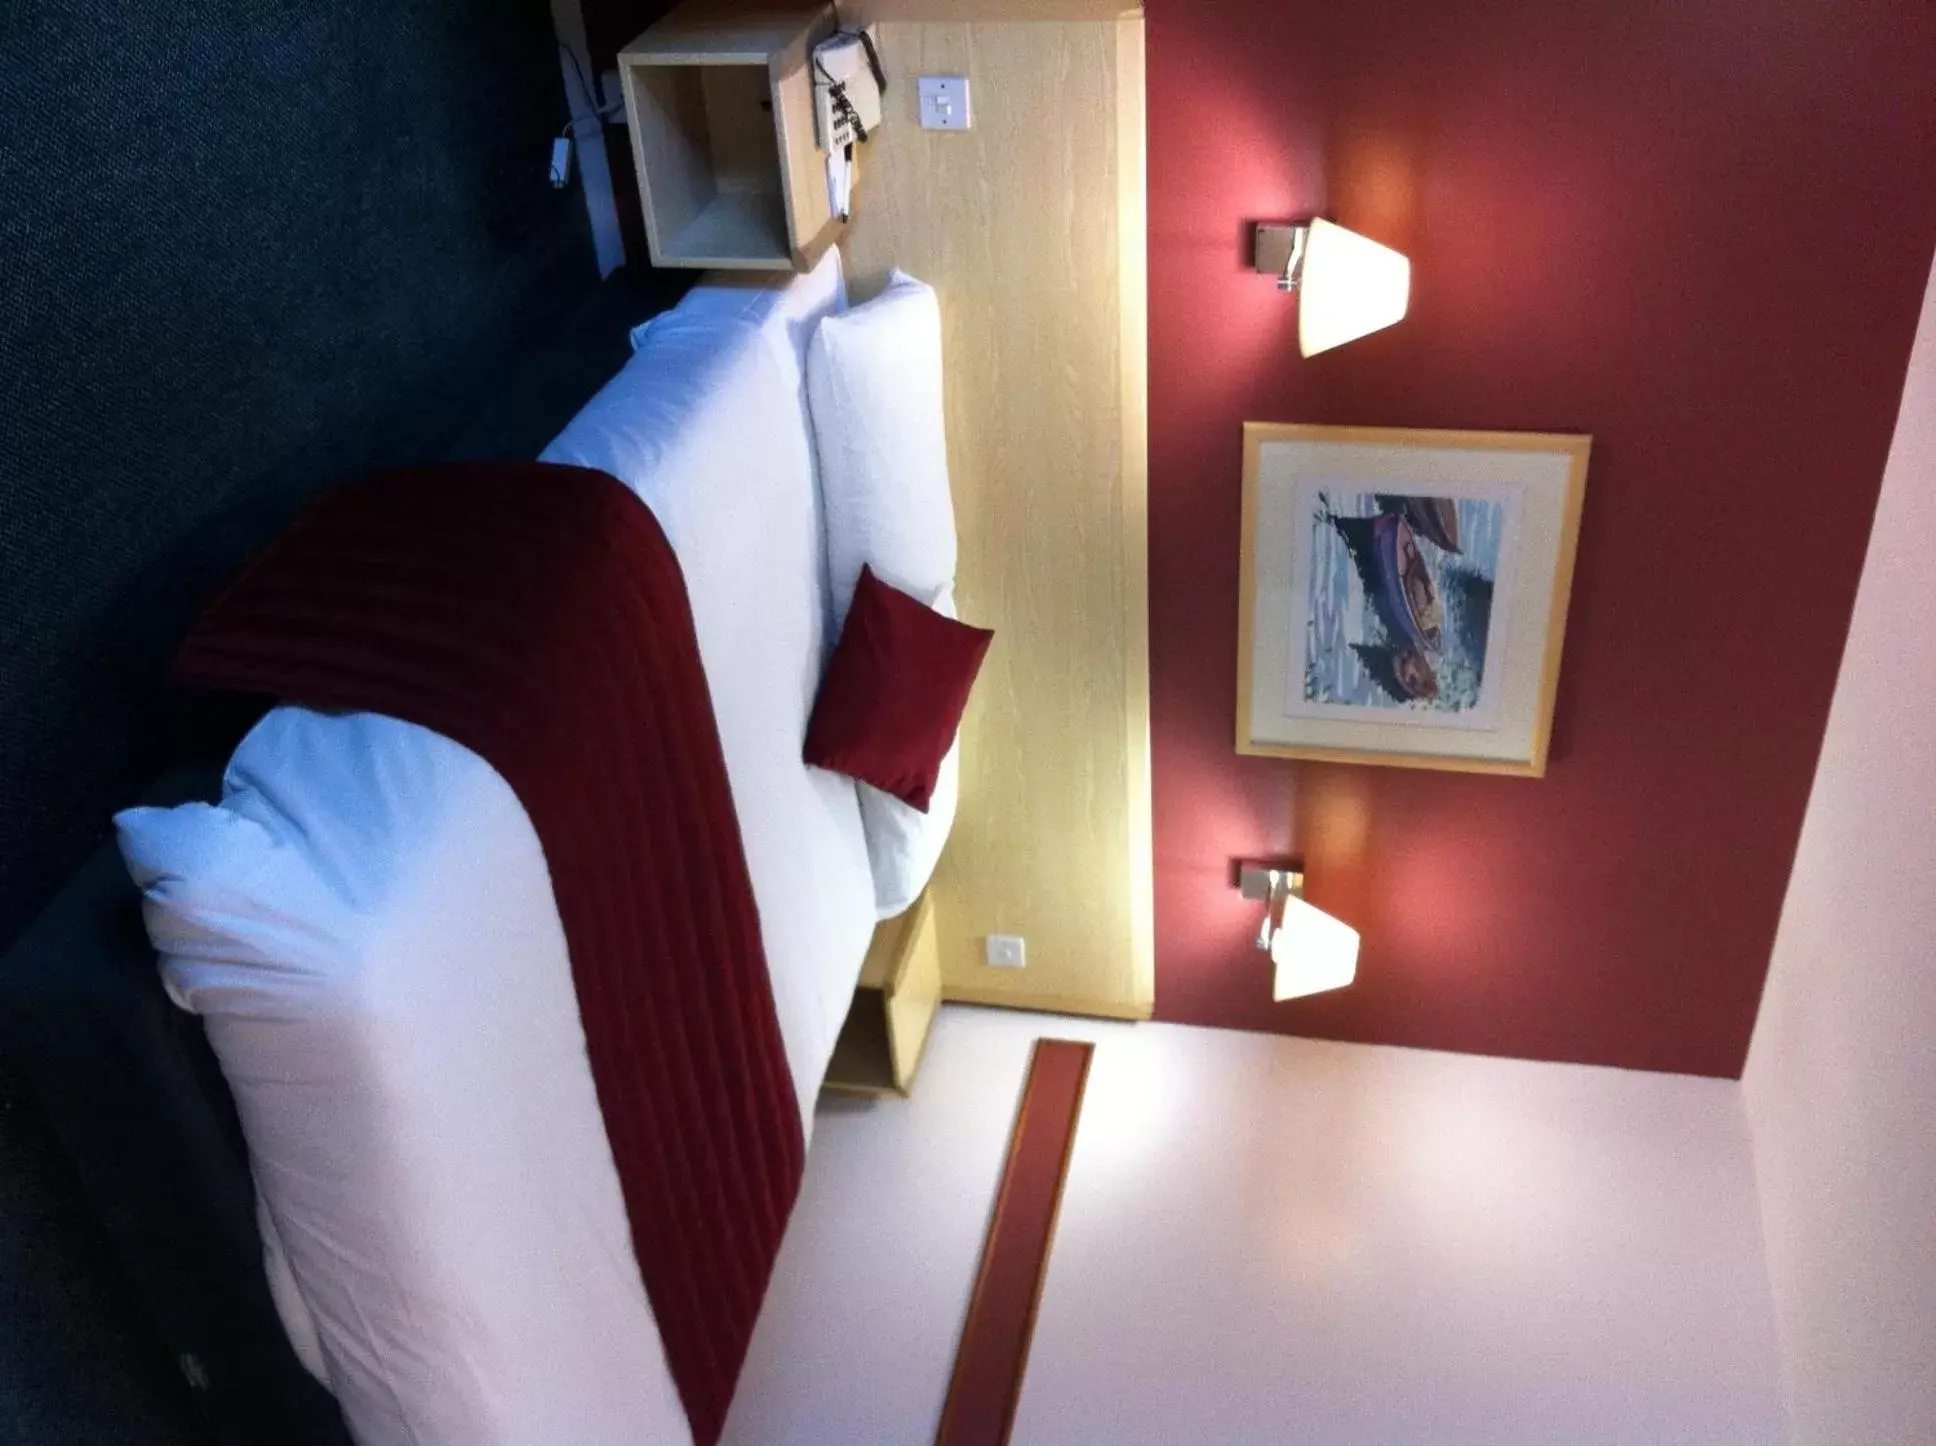 Bed in Days Inn Hotel Bradford - Leeds